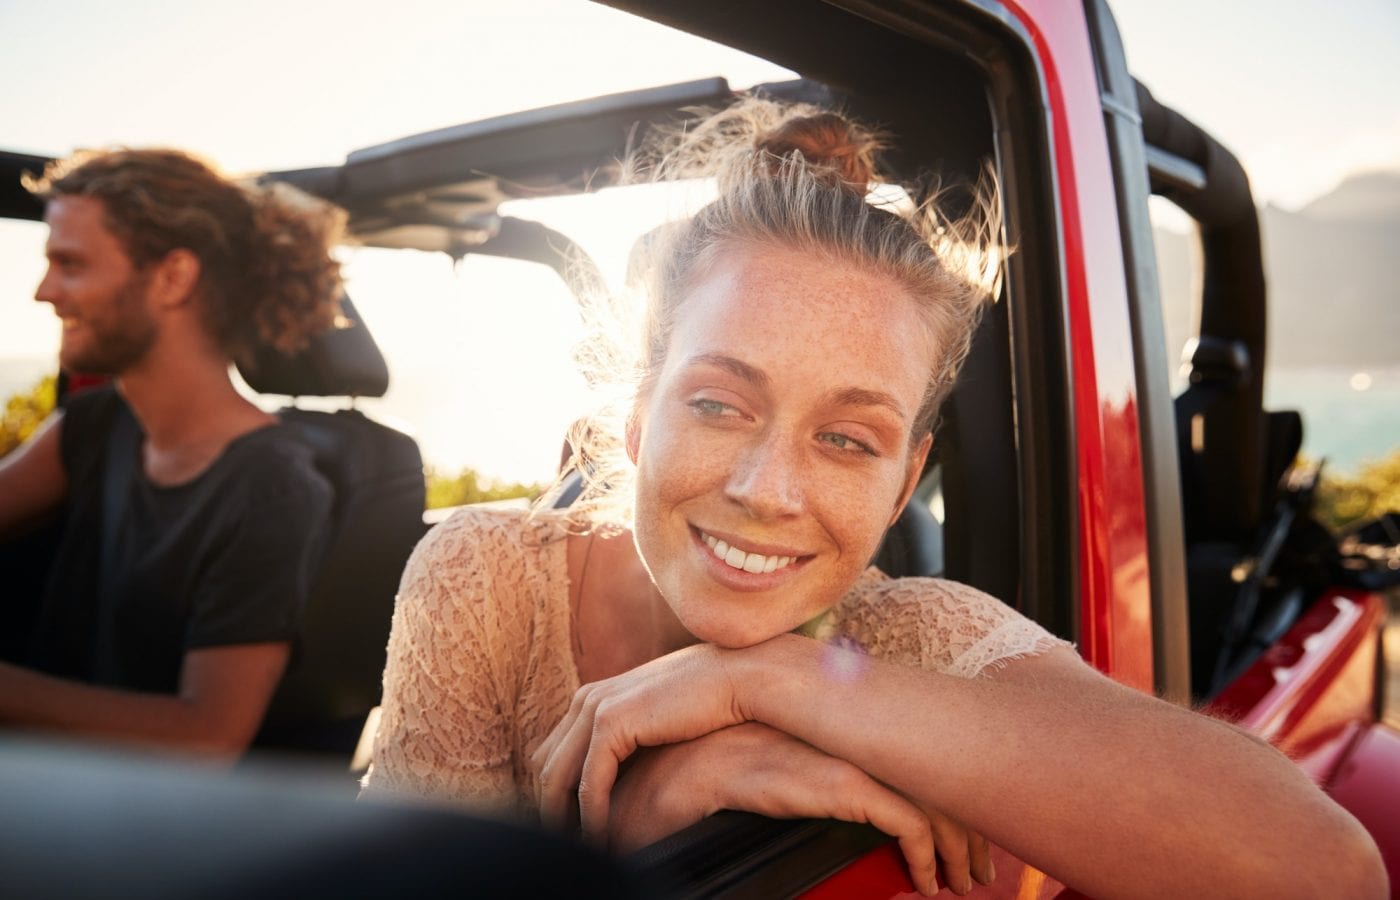 millennial-white-couple-on-a-road-trip-driving-in-open-top-car-women-leaning-on-car-door-close-up-picsk1yn47p7jtsp2ukpd9adq9wv1106oisls2b57s